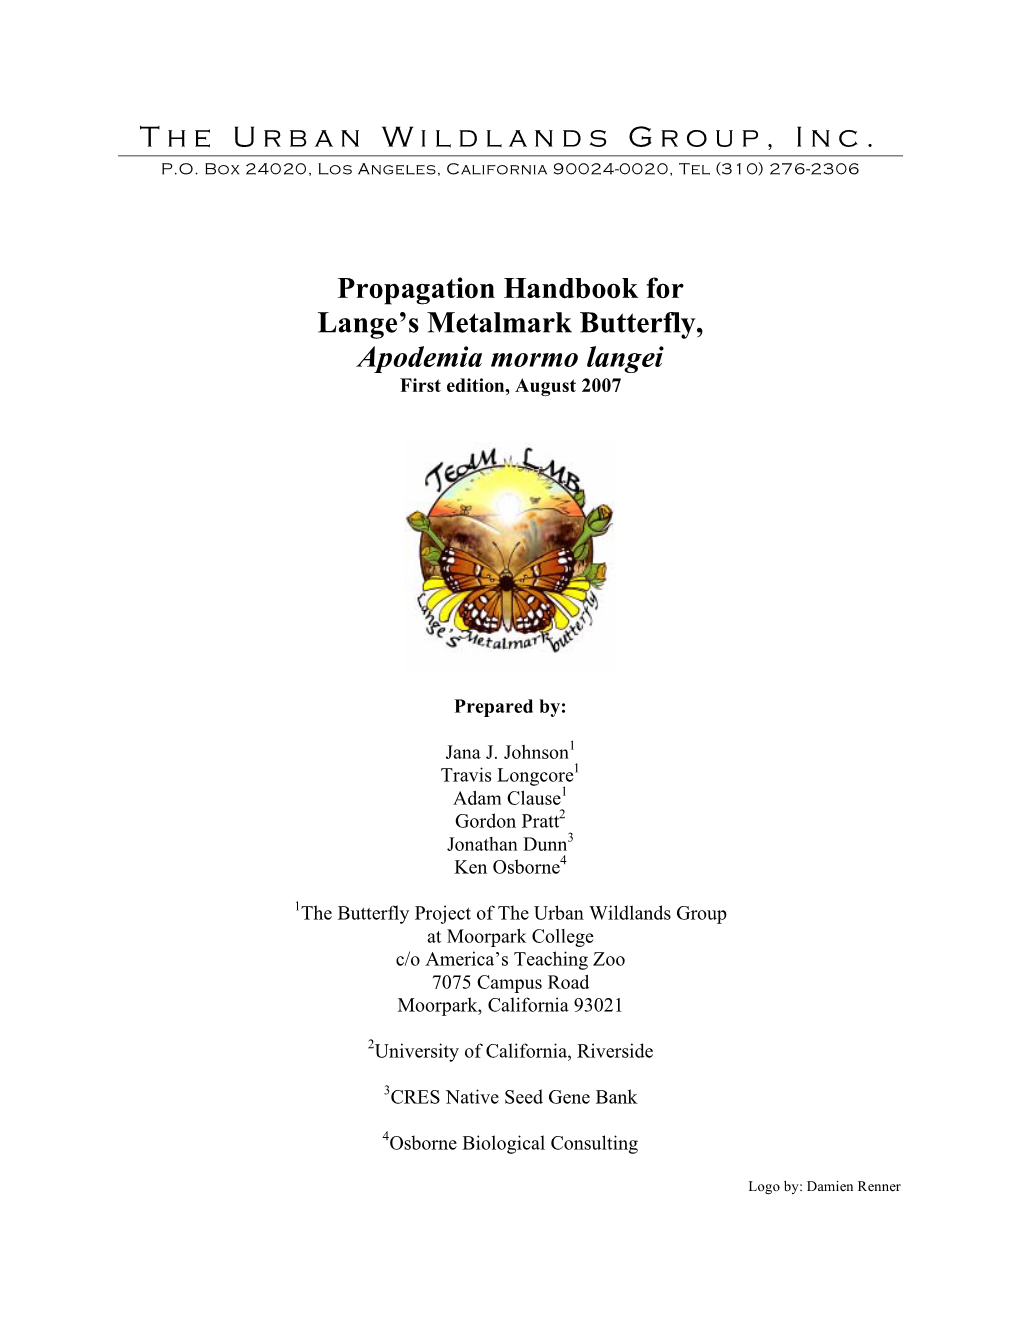 Propagation Handbook for Lange's Metalmark Butterfly, Apodemia Mormo Langei